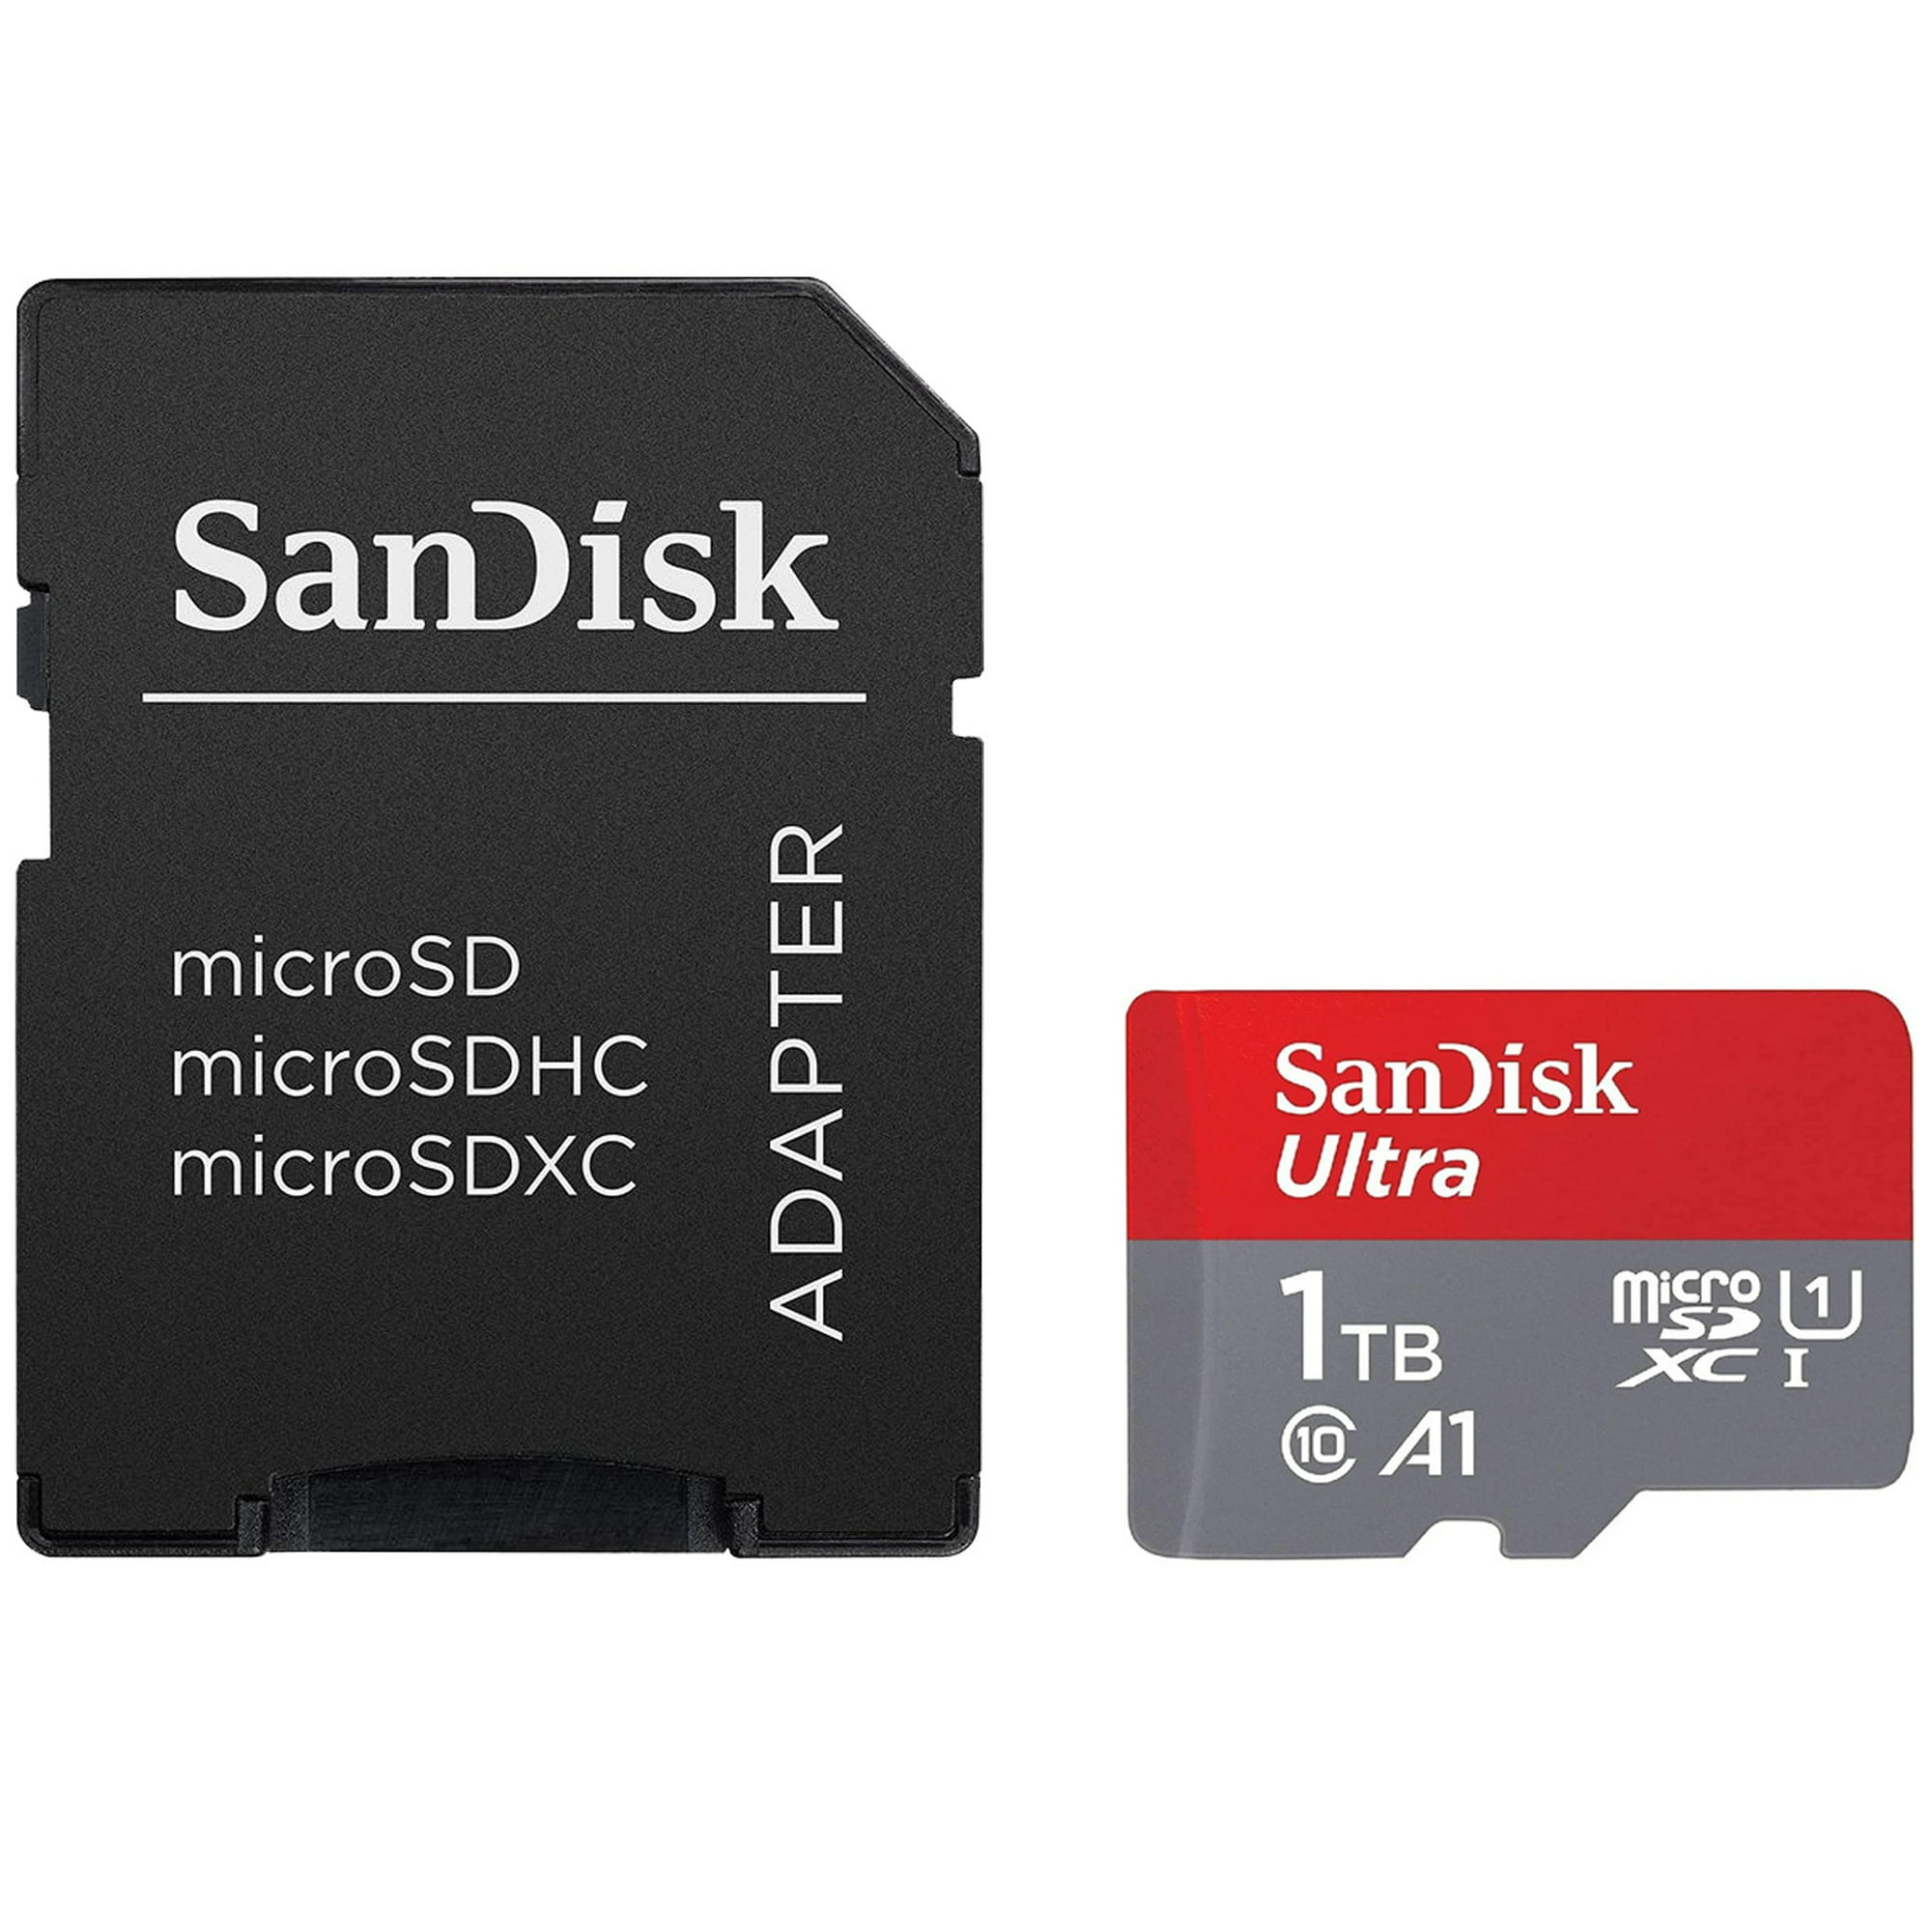 Memoria micro sd 1tb sandisk a1 juegos sdsquac-1t00-Gn6ma sandisk sdsquac-1t00-Gn6ma